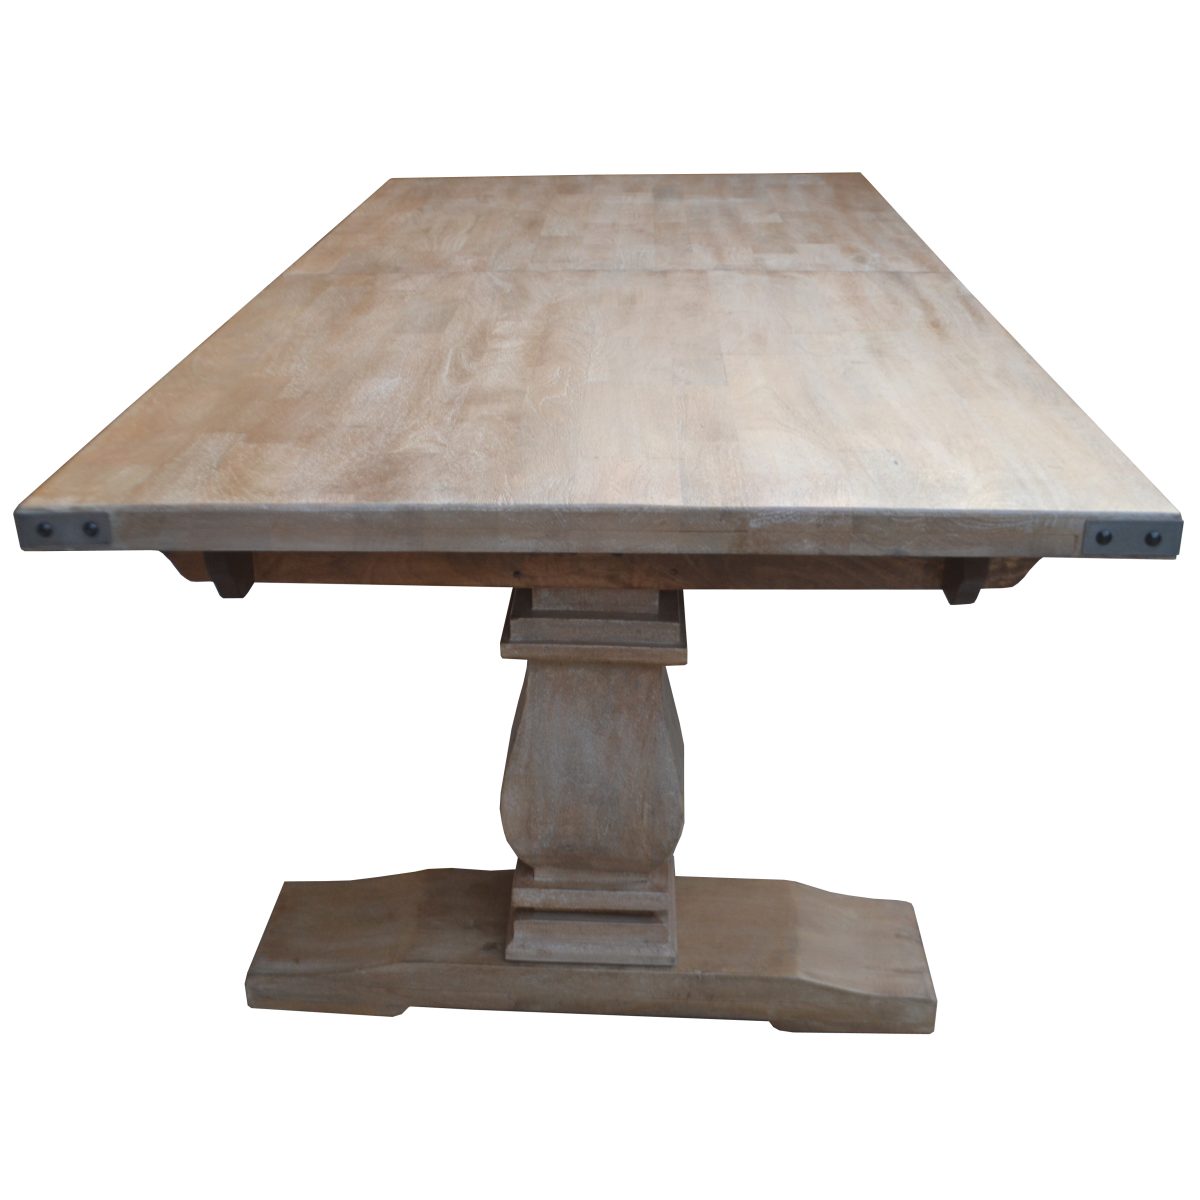 Gloriosa Dining Table 258-348cm Extendable Pedestal Mango Wood – Honey Wash